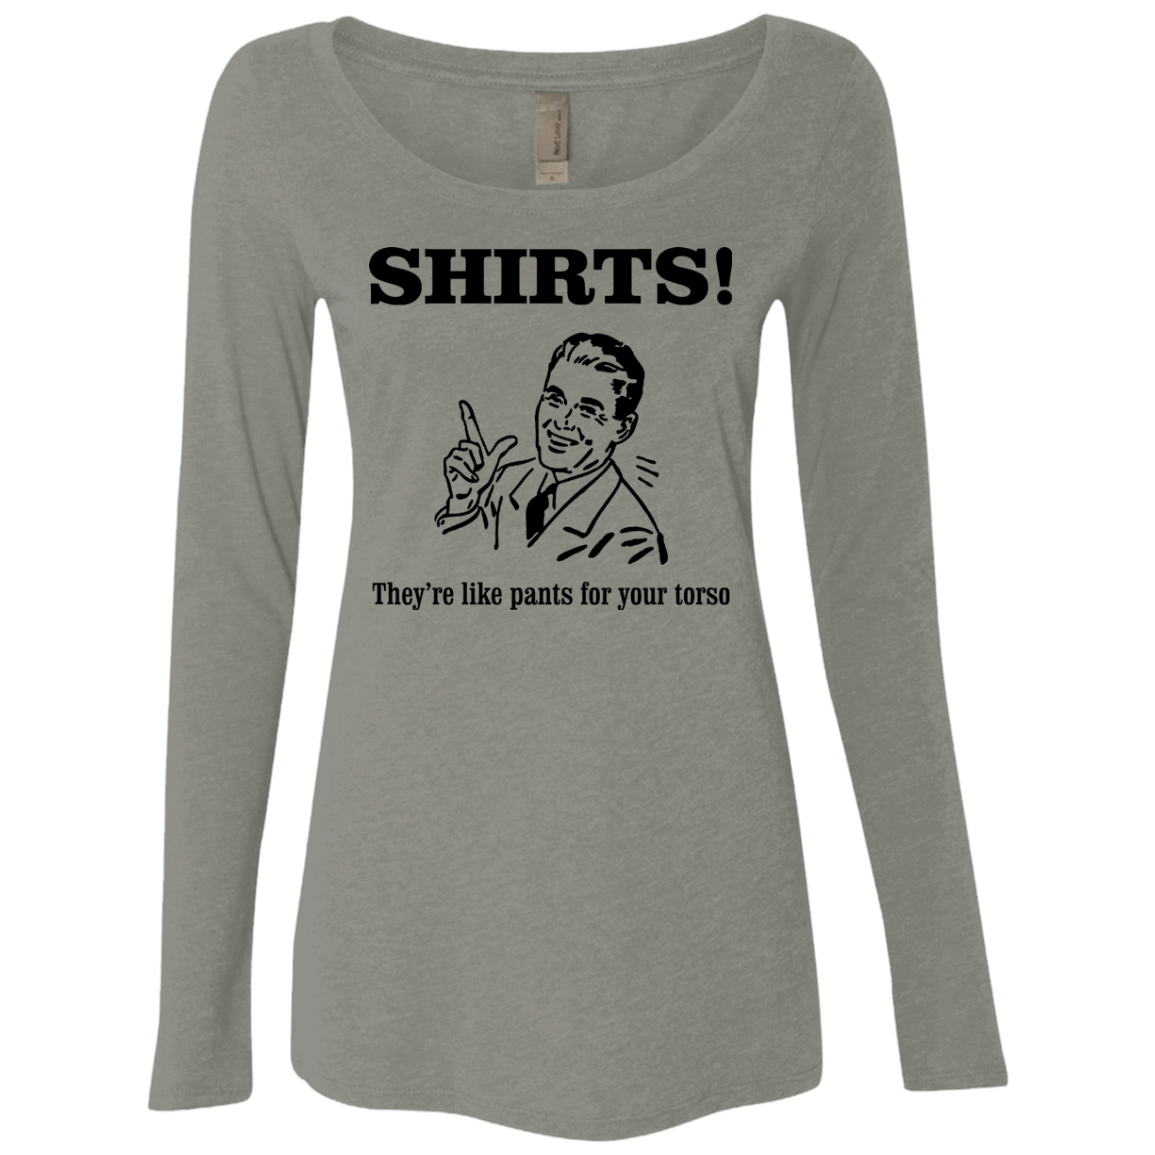 T-Shirts Venetian Grey / Small Shirts like pants Women's Triblend Long Sleeve Shirt